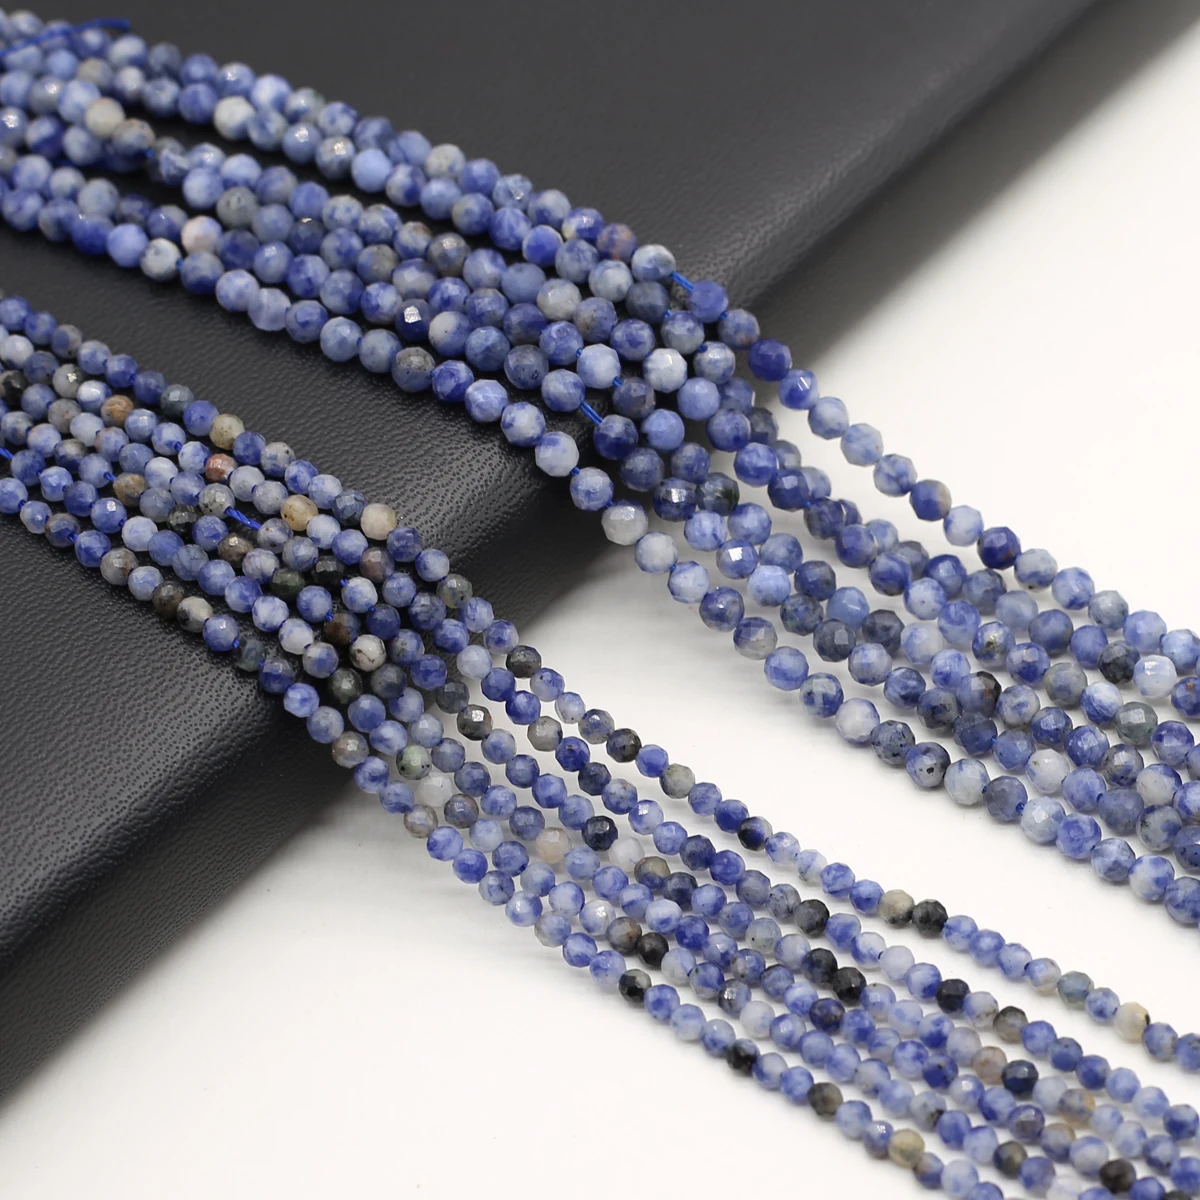 Купи Natural Stone Faceted Beaded Round Sodalite Gemstone Loose Isolation Beads for Jewelry Making Diy Necklace Bracelet Accessories за 169 рублей в магазине AliExpress